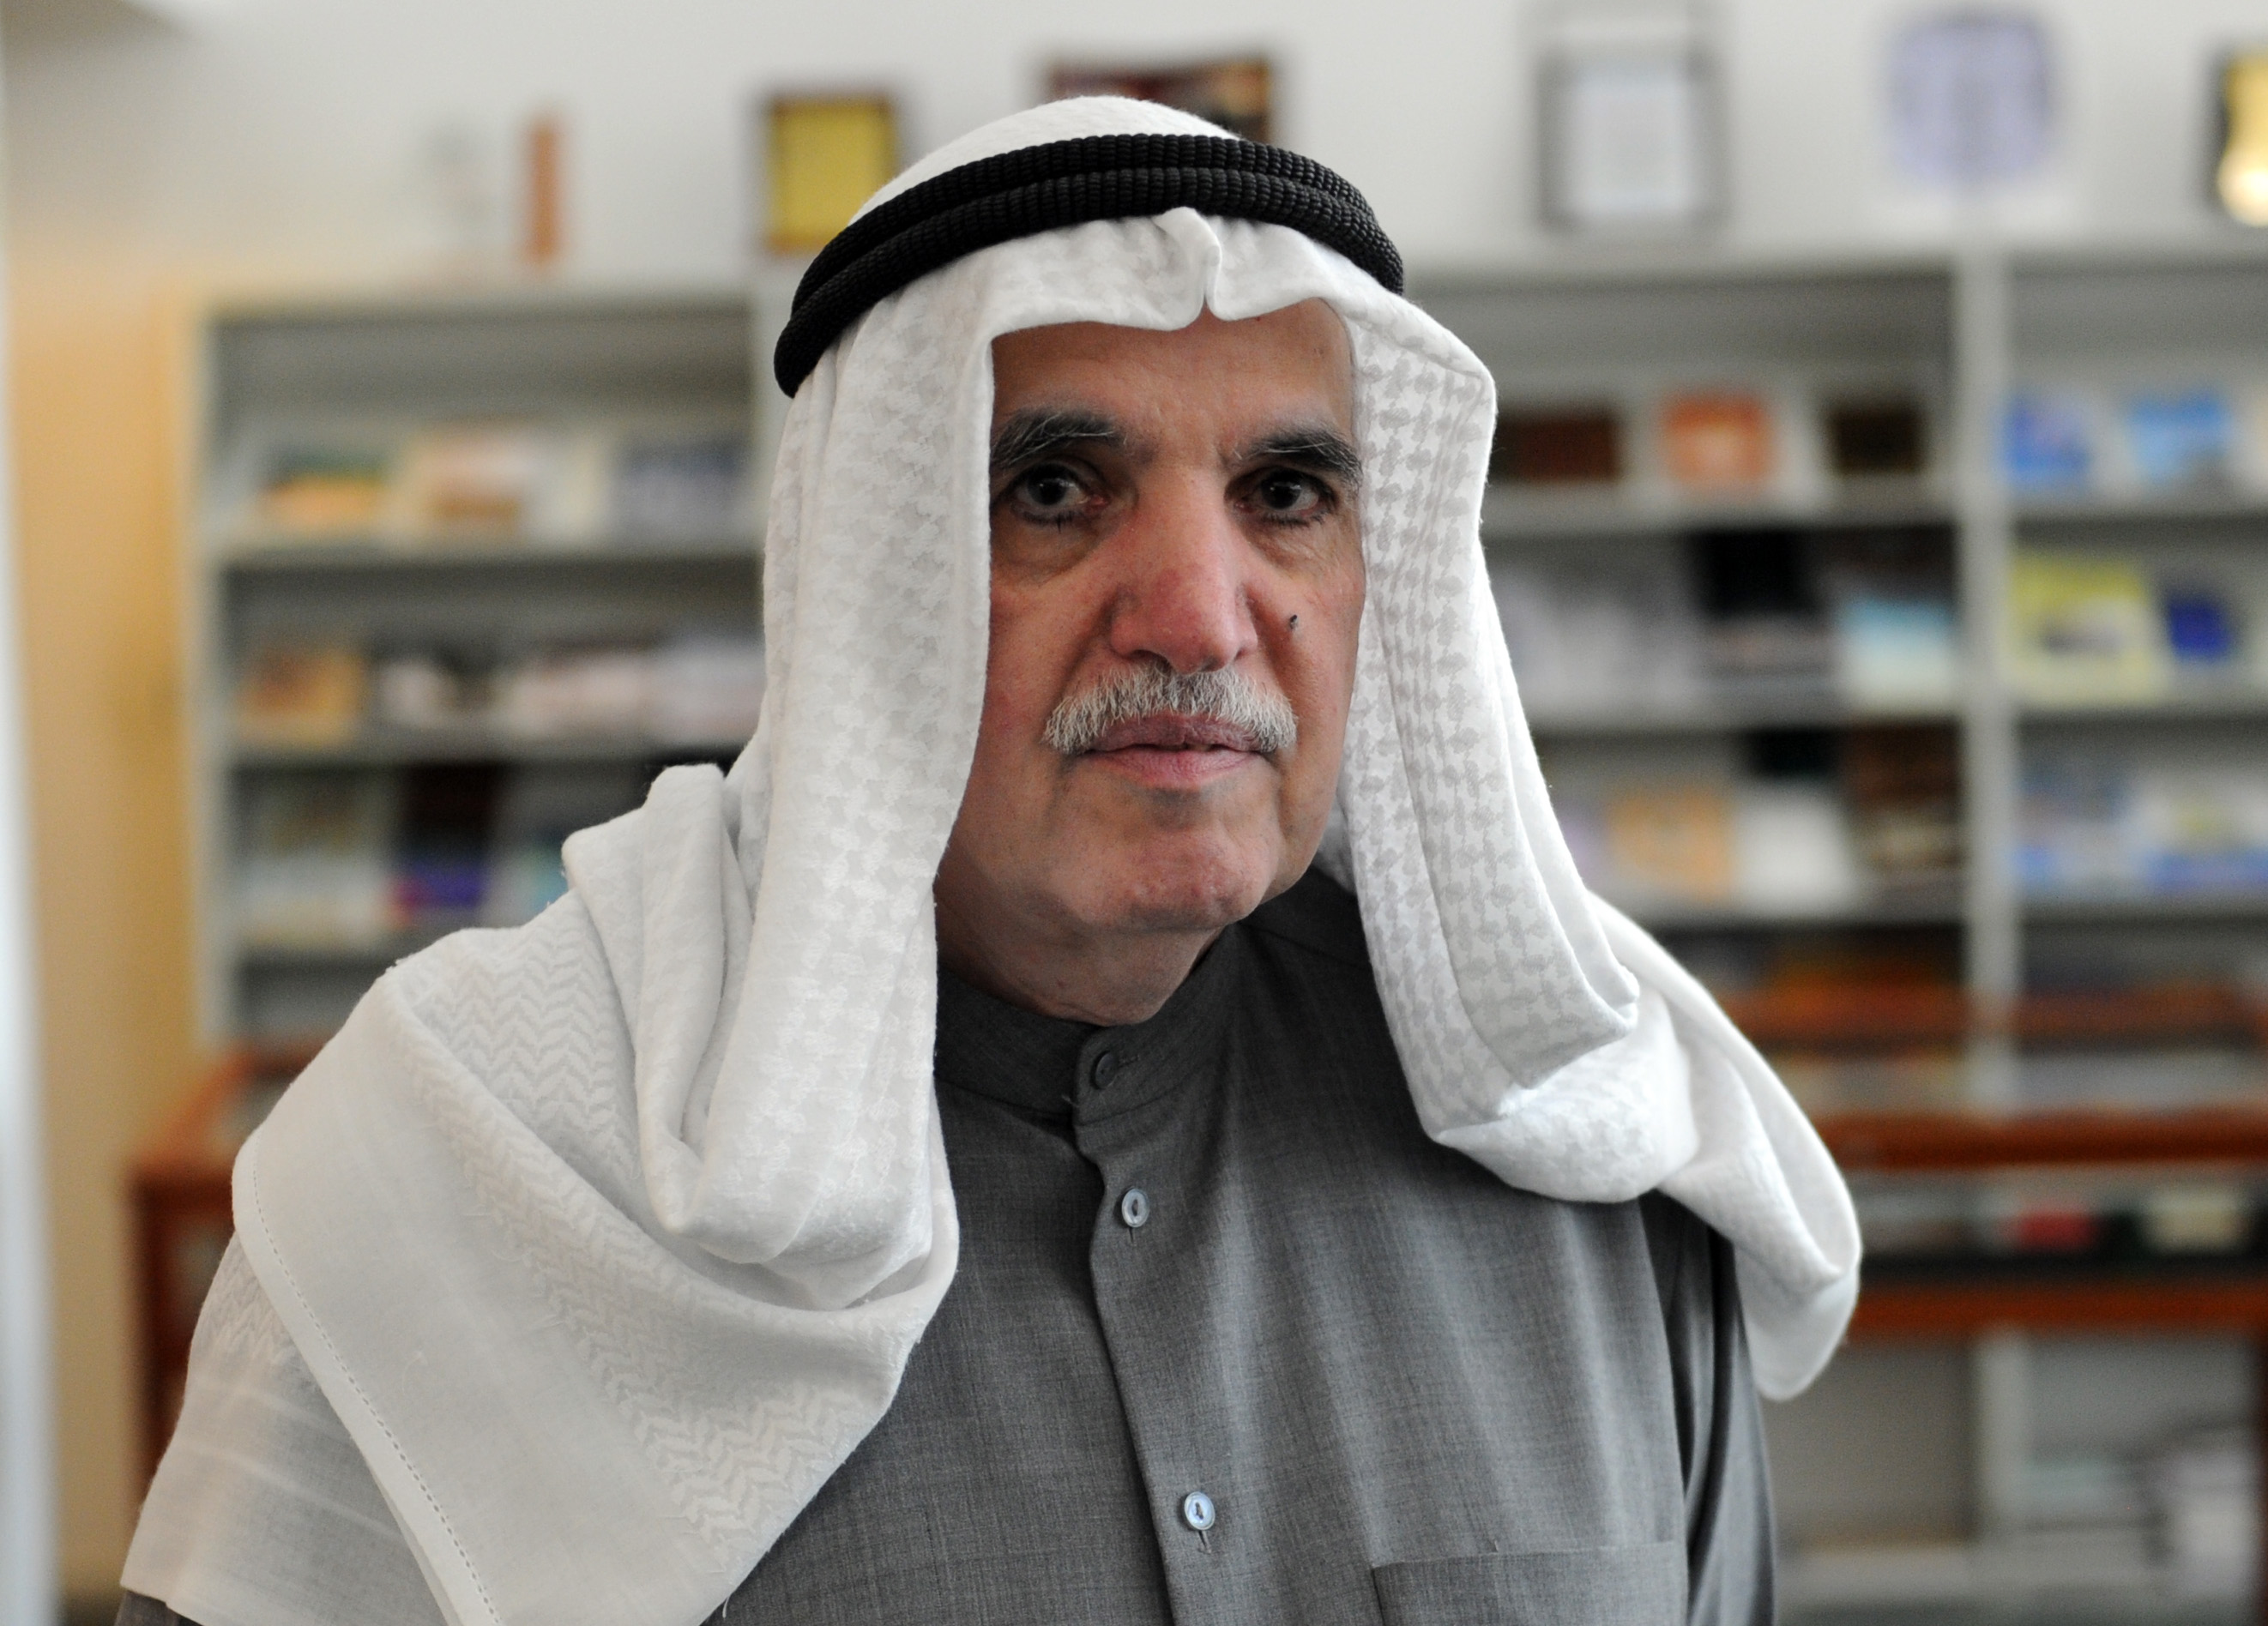 The center's Chief, Dr. Abdullah Al-Ghuniam